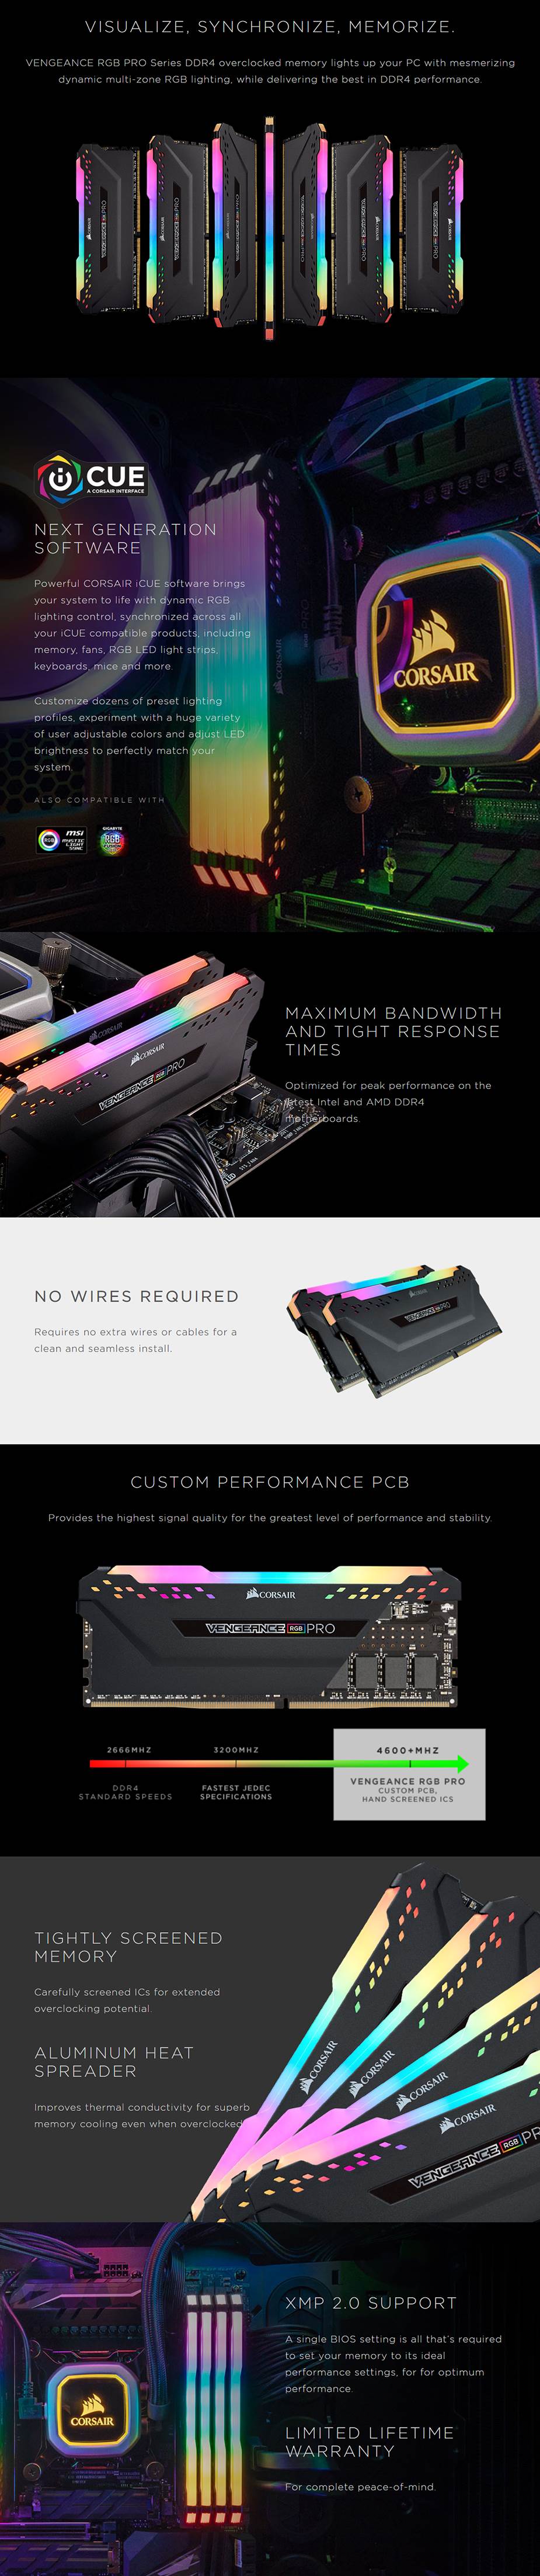 Corsair memory Kit 16G 2x8G Pro RGB CMW16GX4M2C3000C15 @